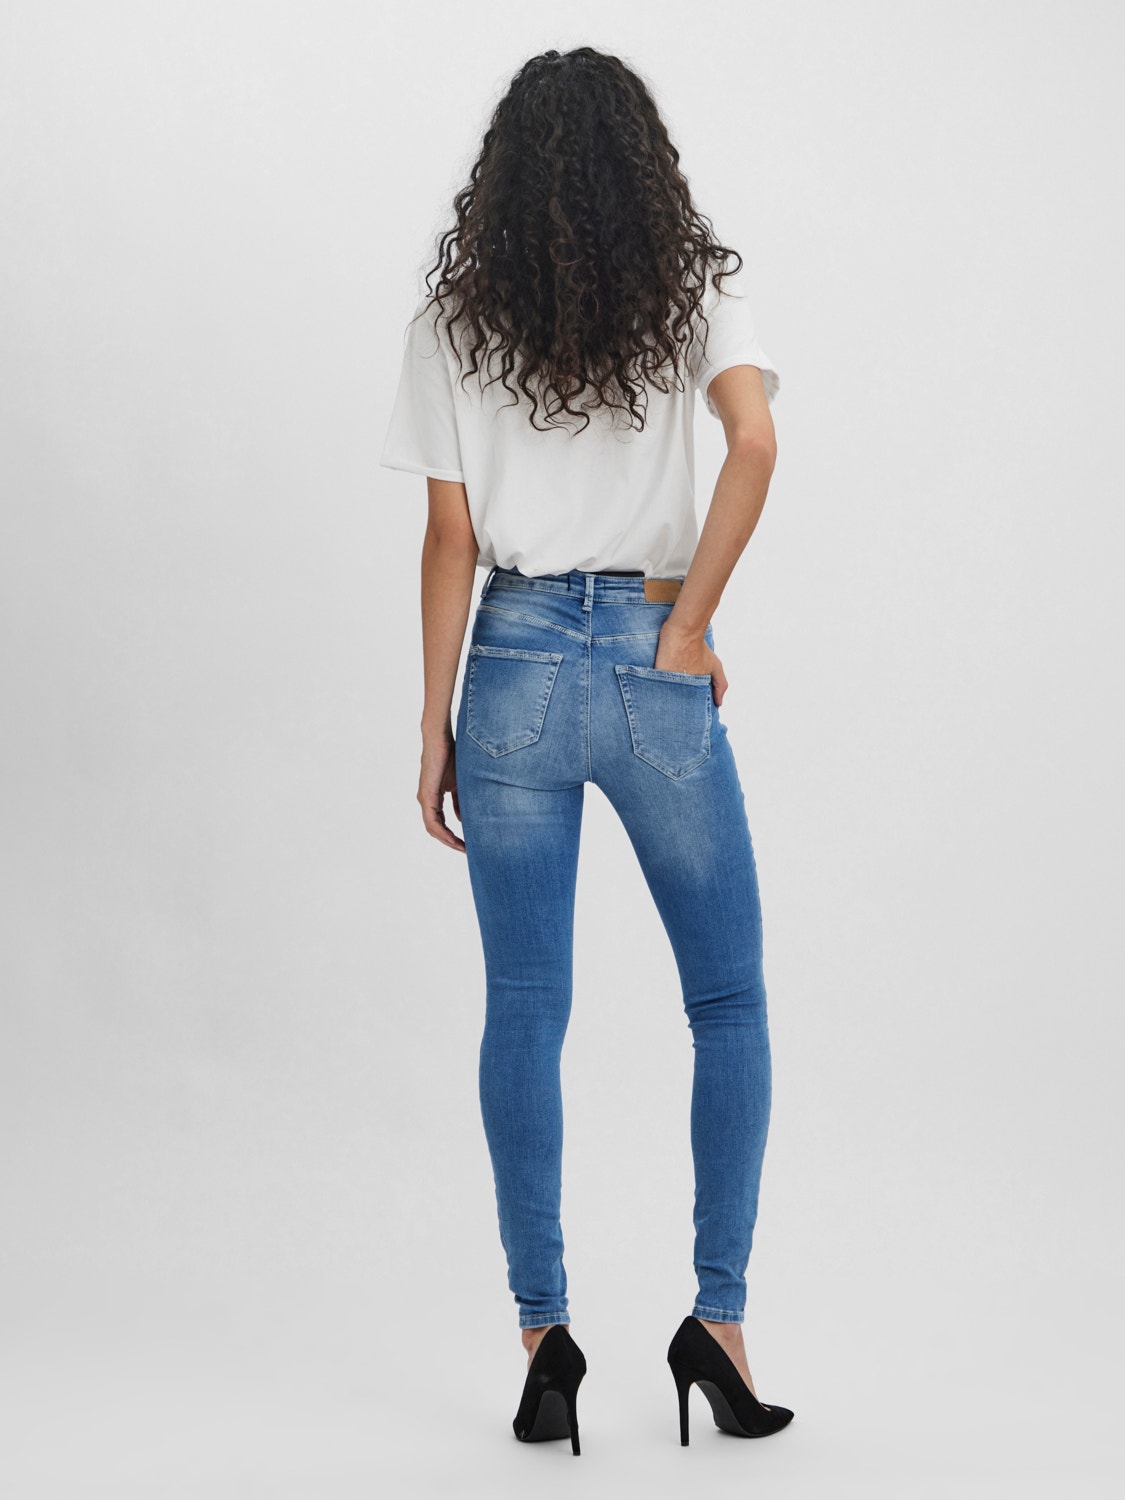 Moda® rise Vero | with VMSOPHIA High 60% Jeans discount!